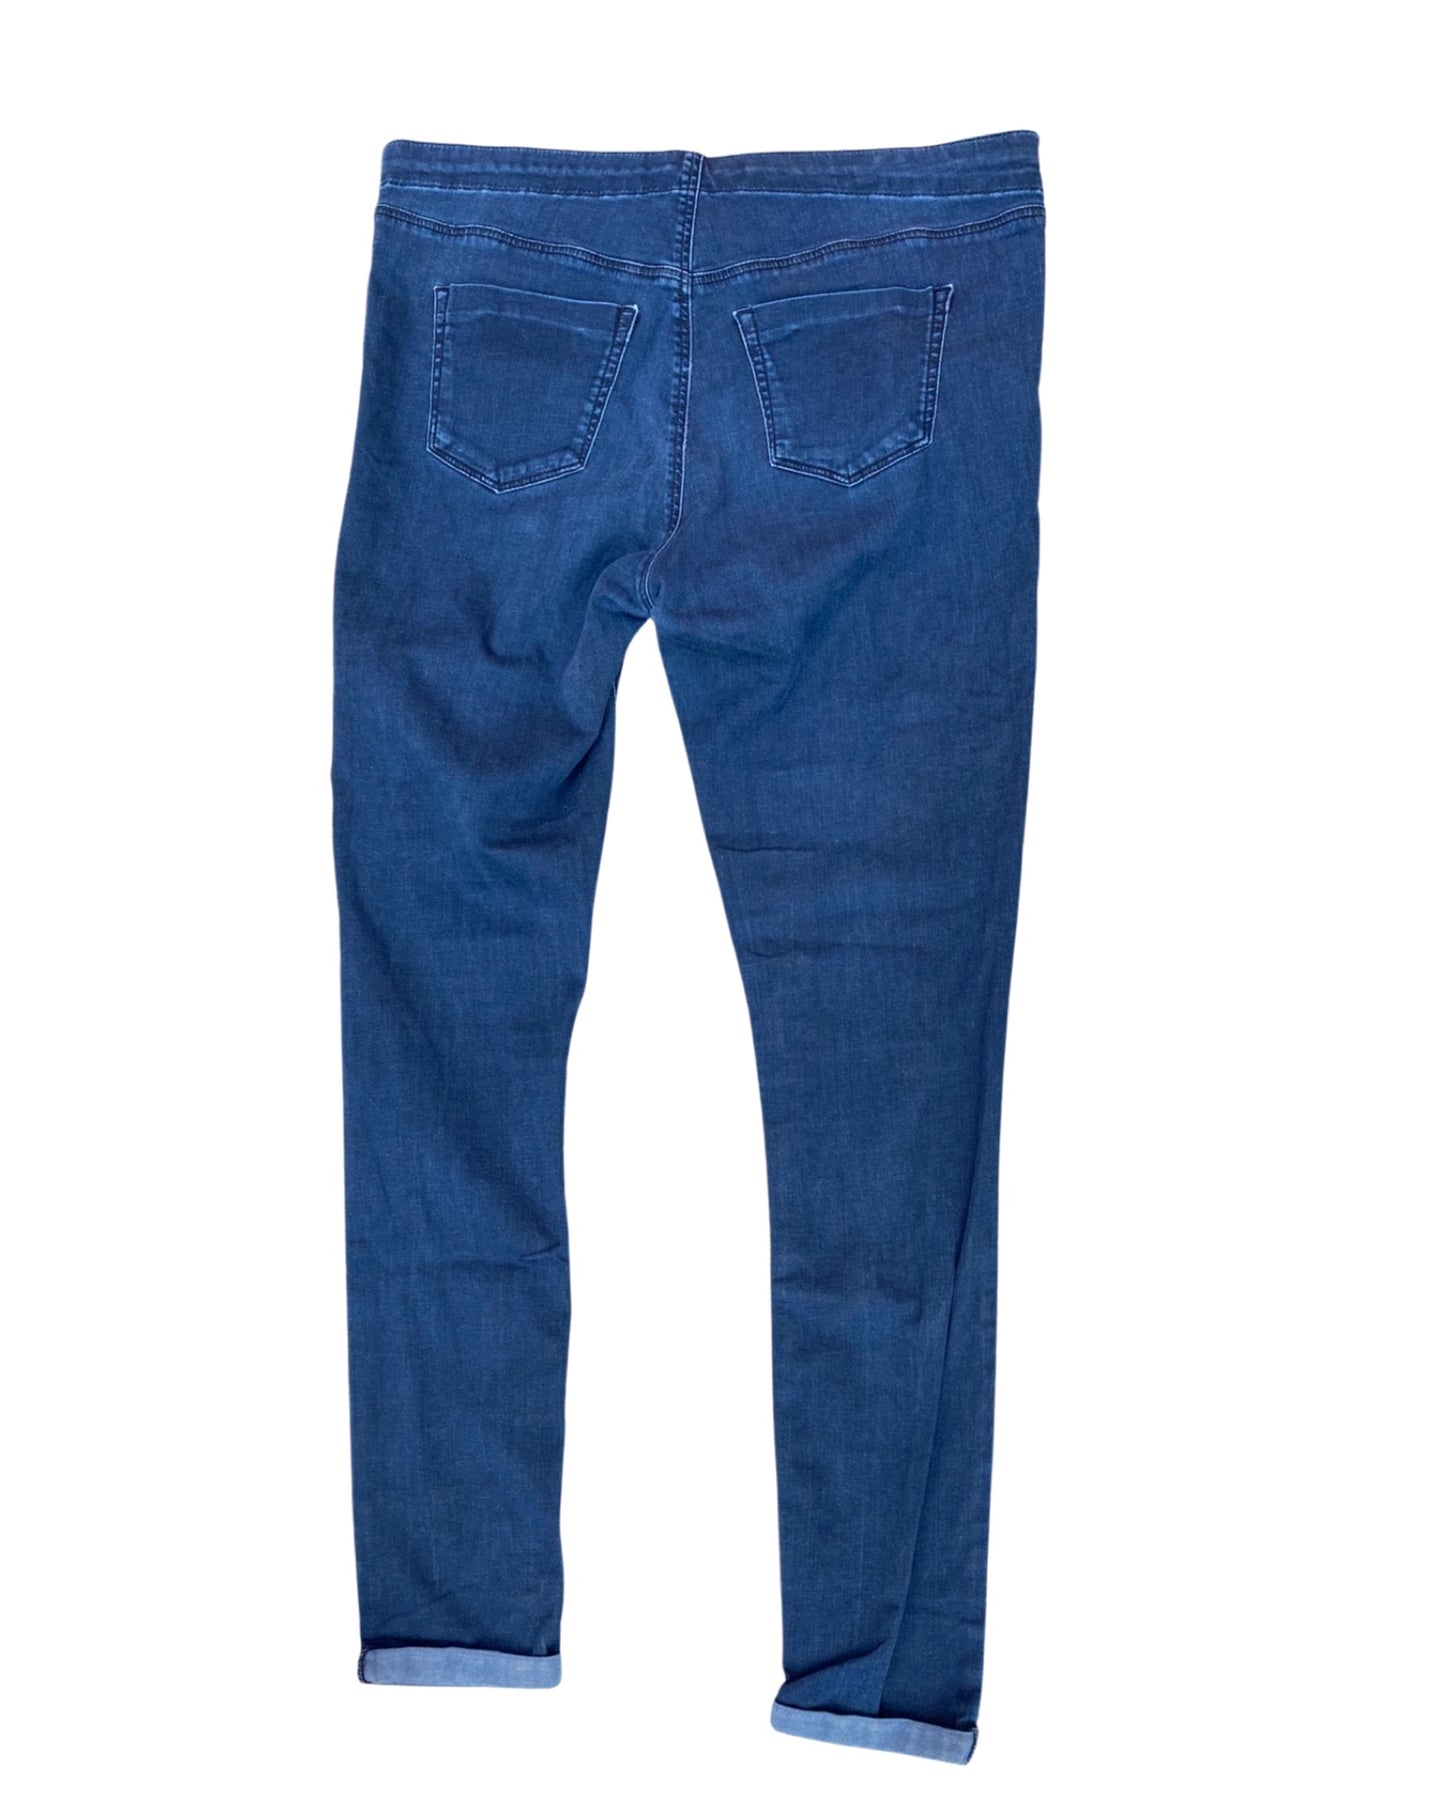 Topshop maternity leigh under bump indigo wash jeans (size 12 L32)